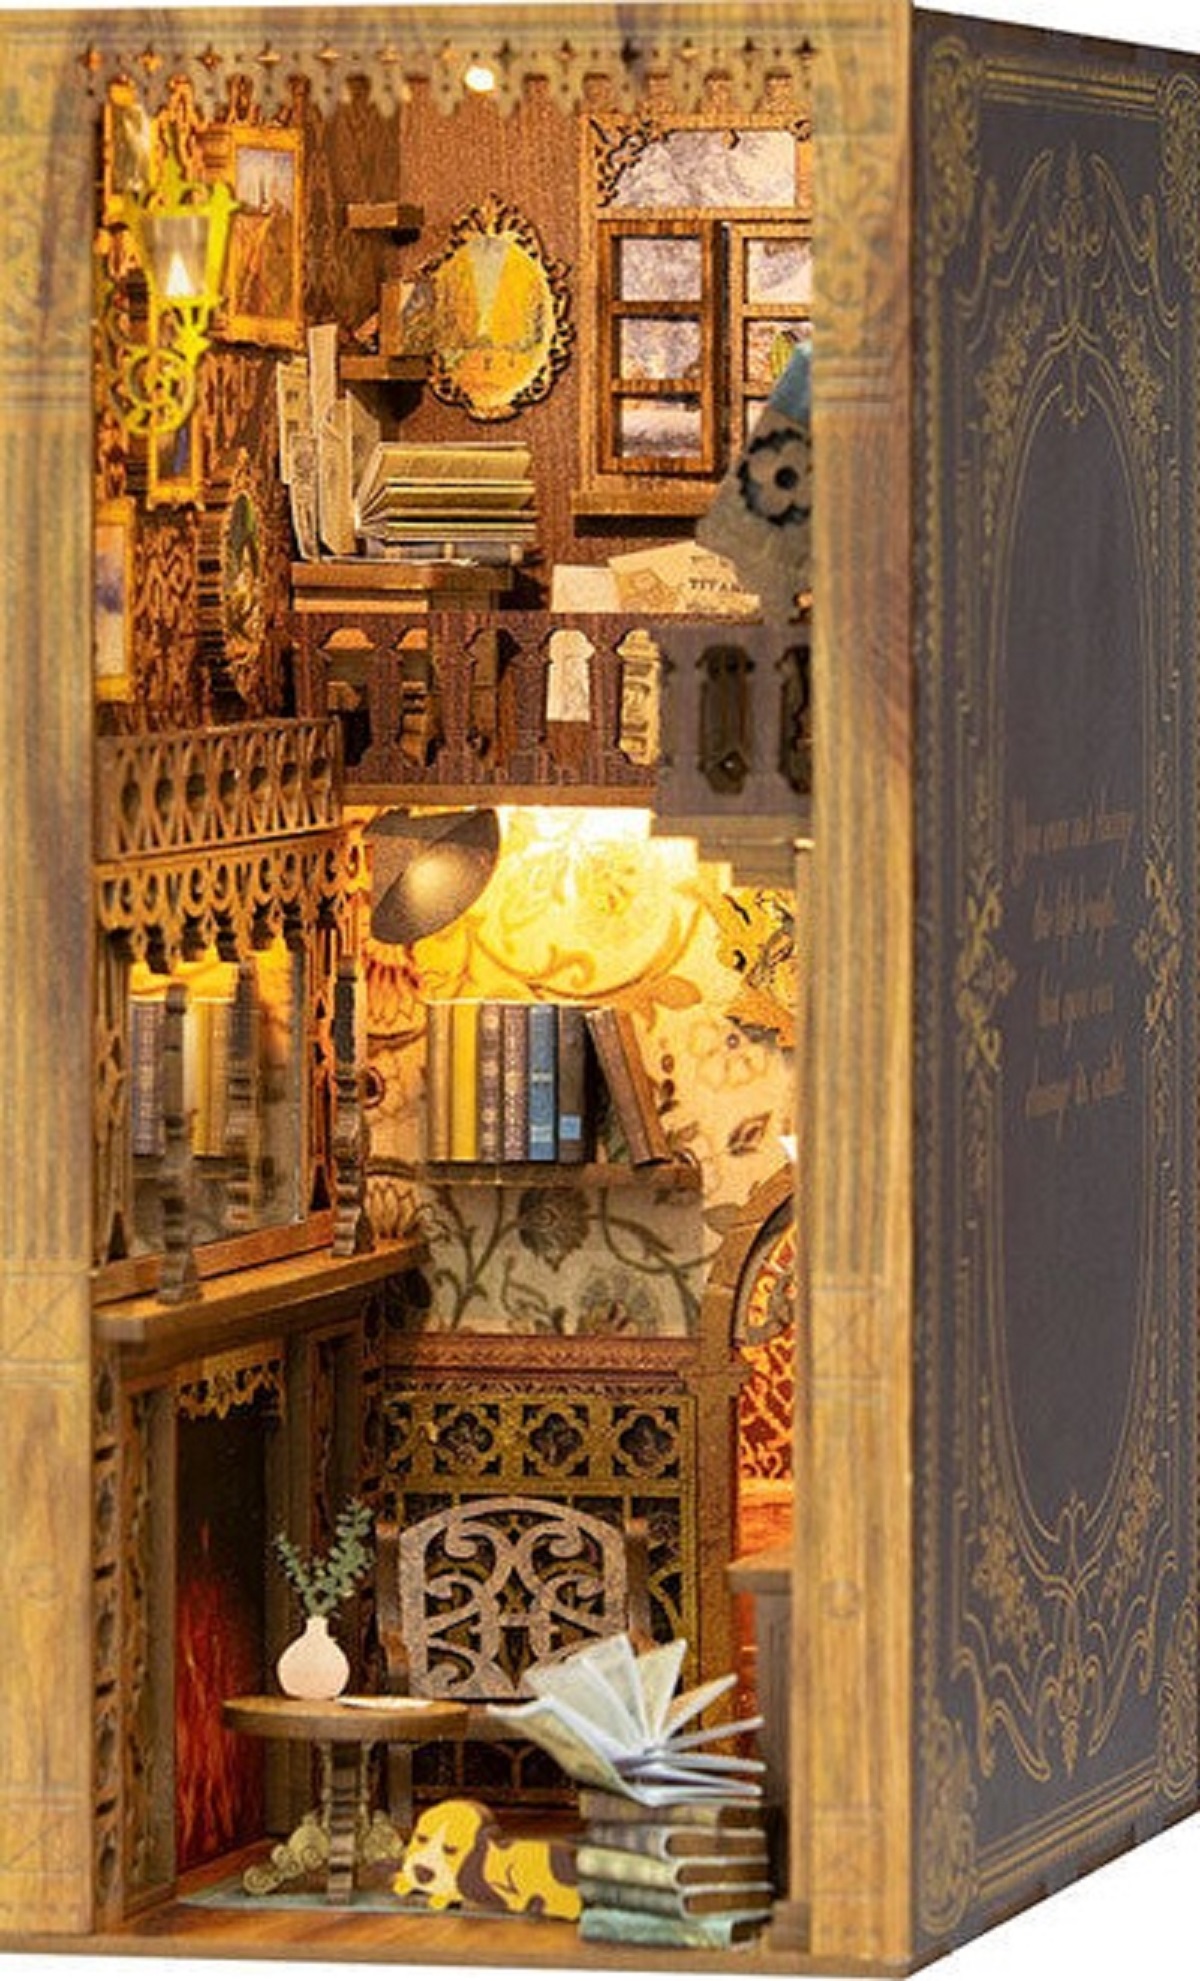 Puzzle 3D: Eternal Bookstore Book Nook